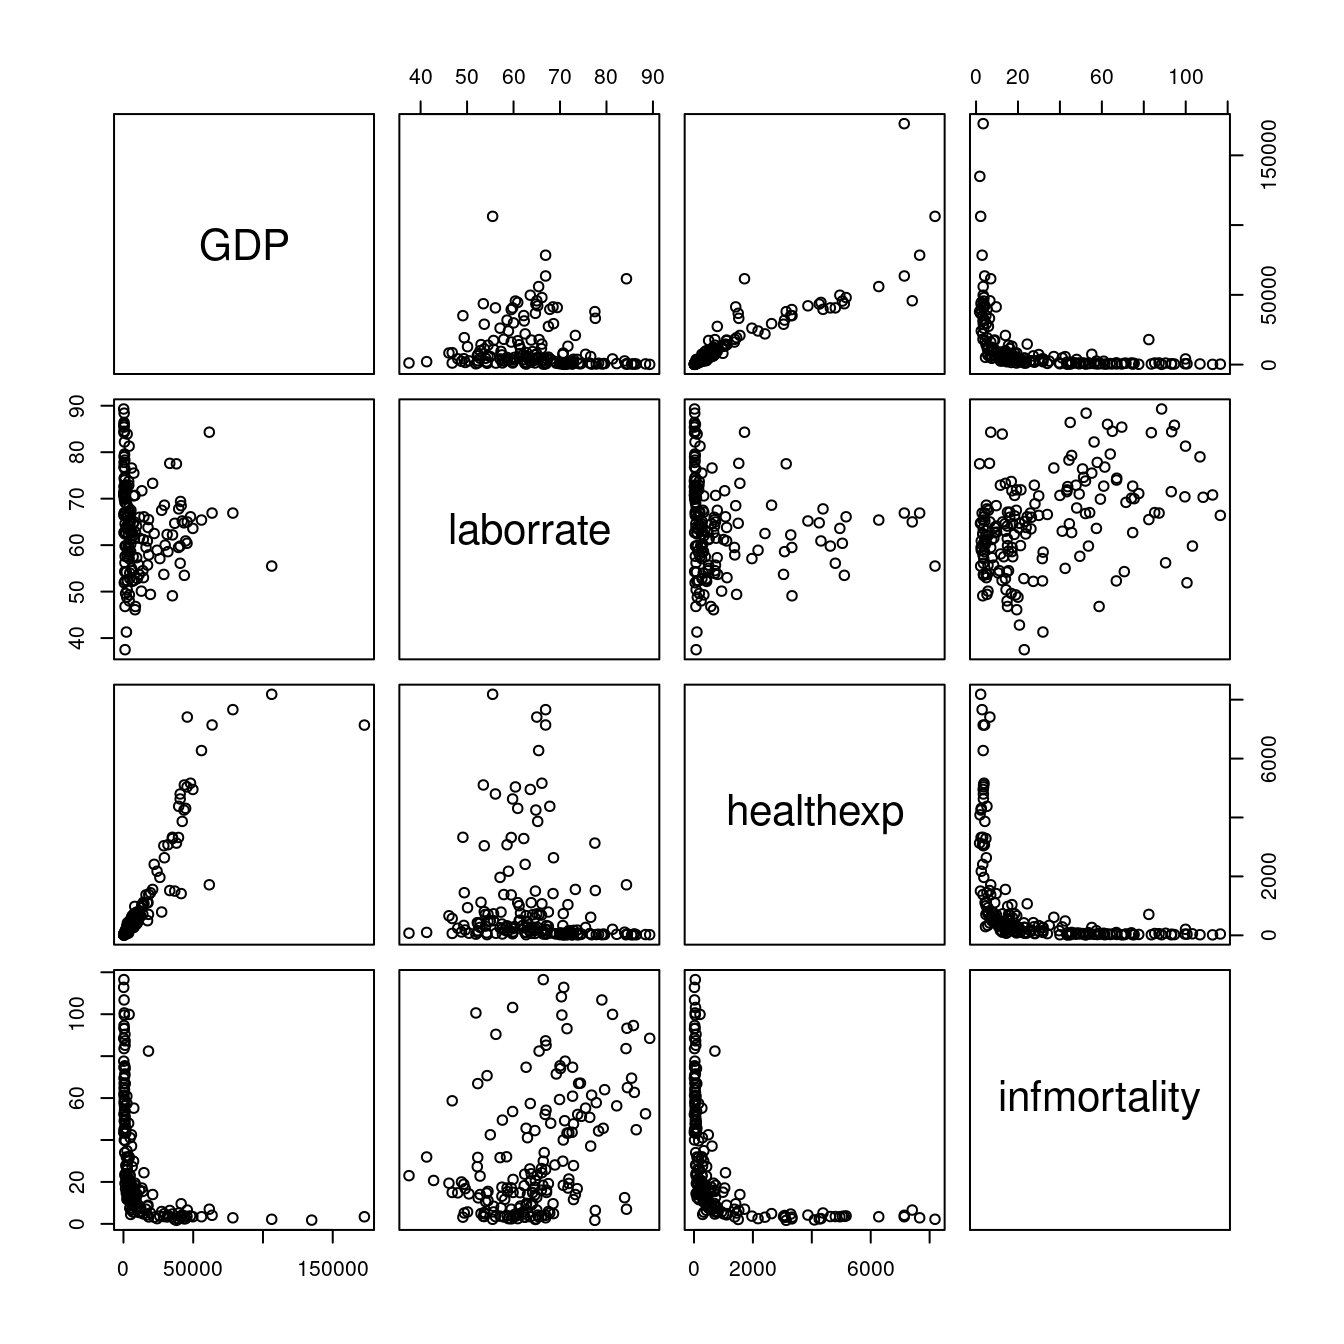 A scatter plot matrix